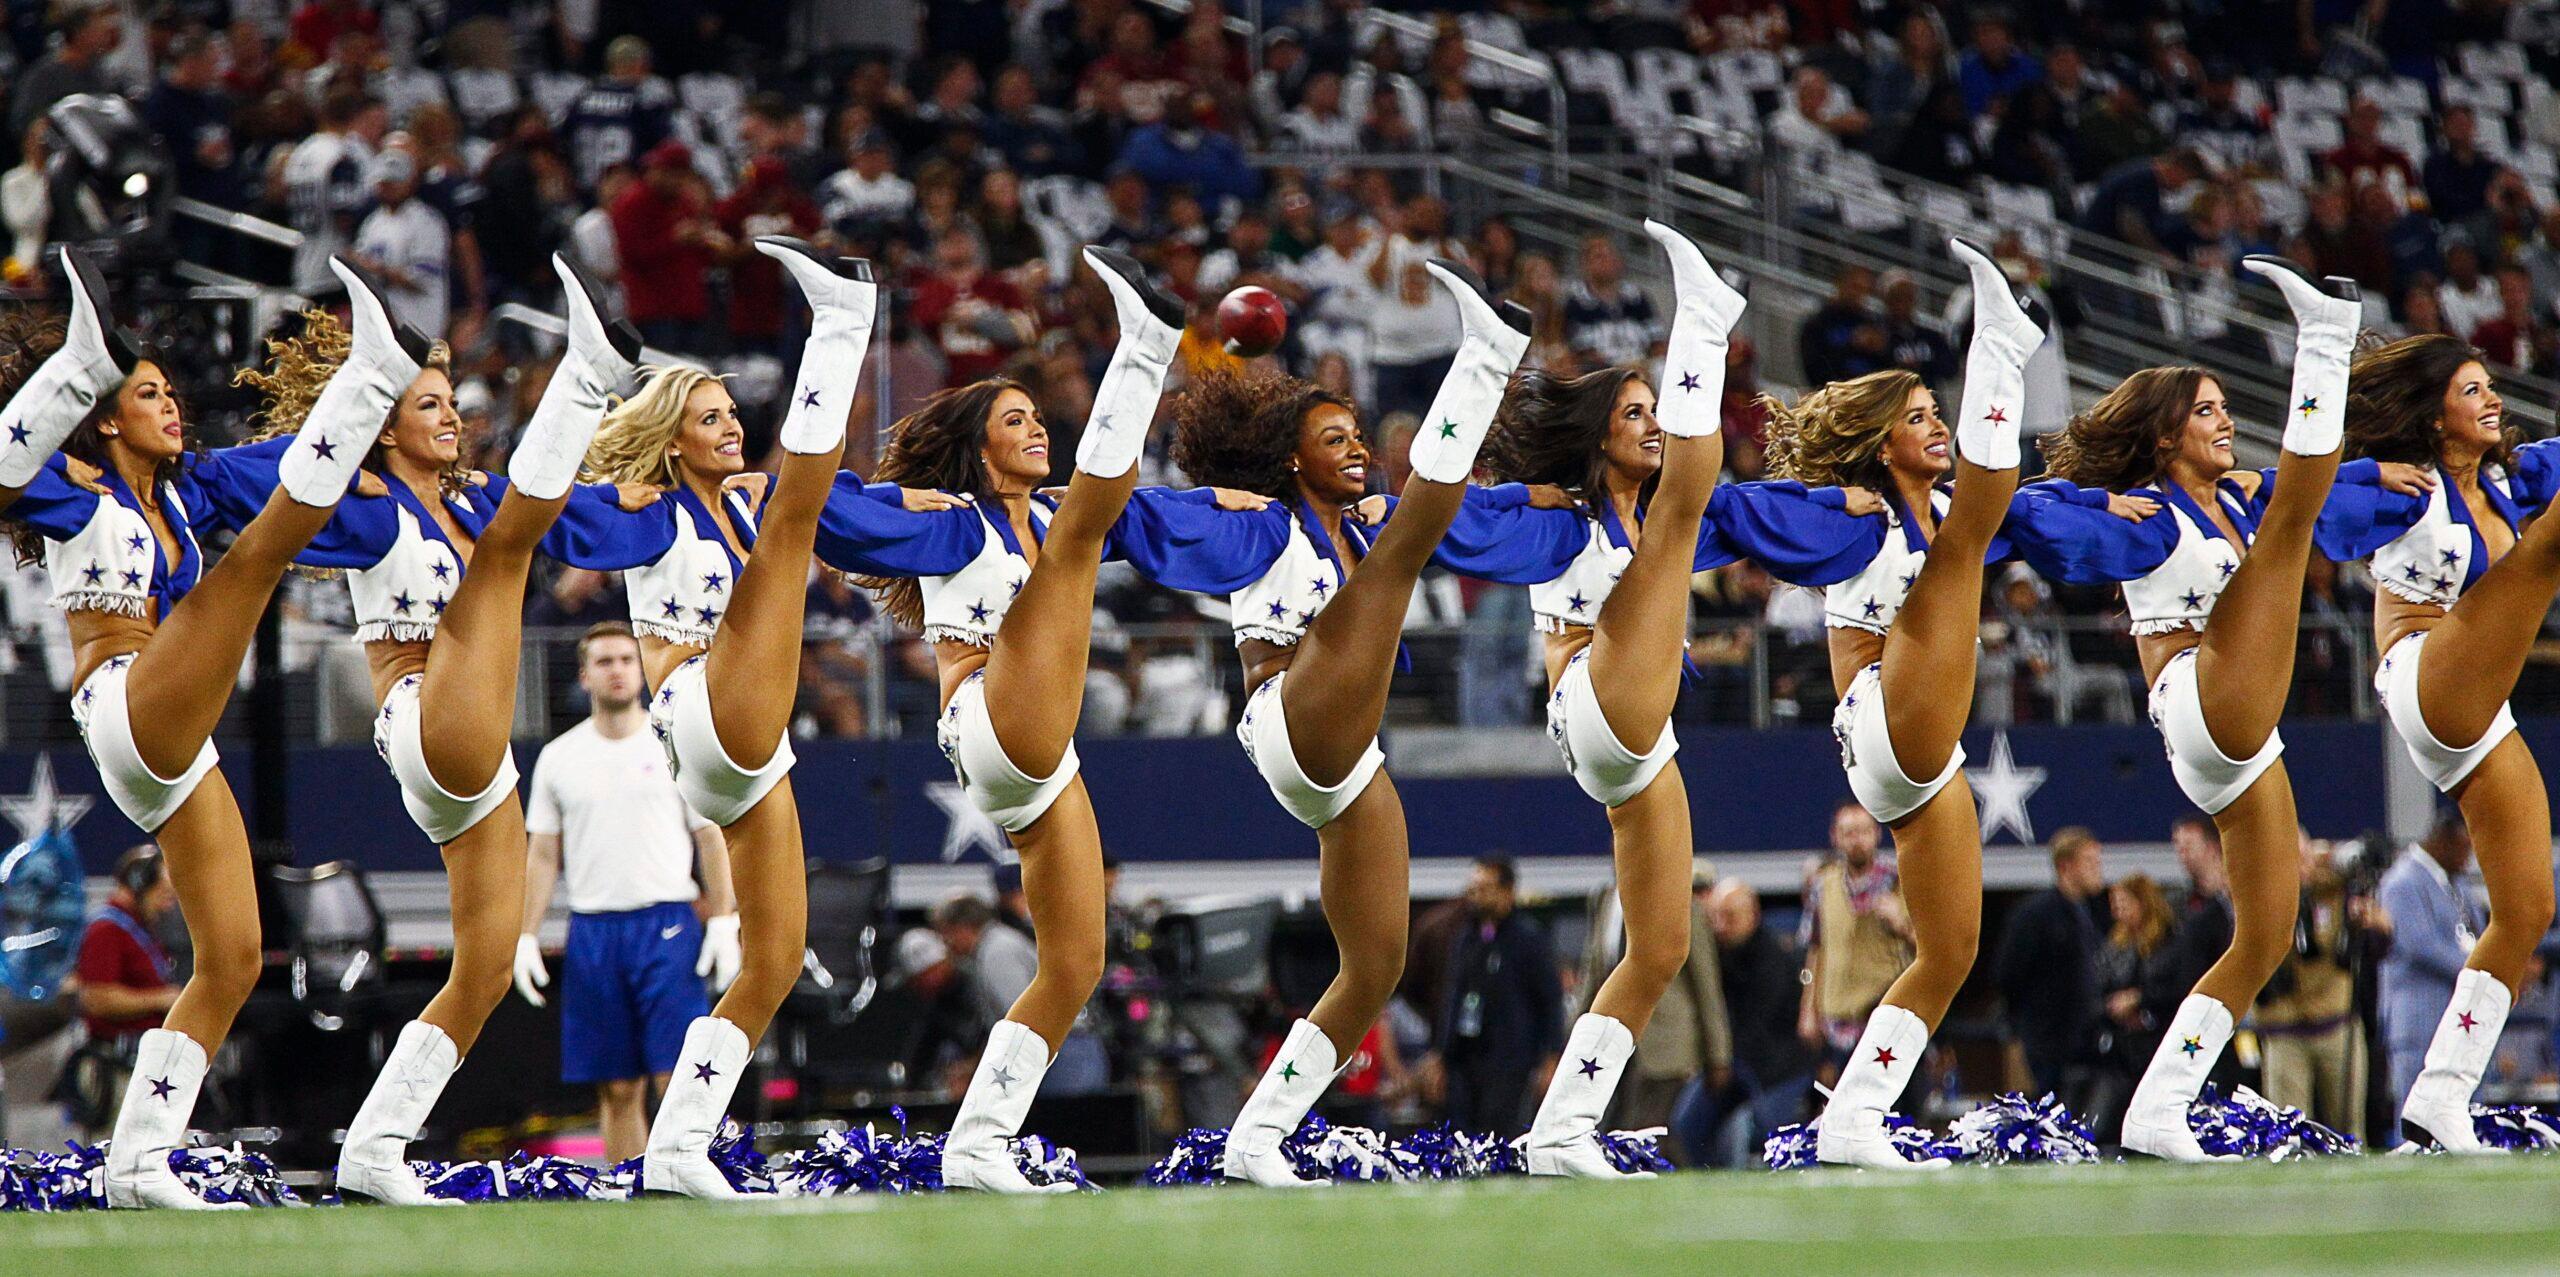 The Dallas Cowboys Cheerleaders kick line at The Dallas Cowboys vs the Washington Redskins game